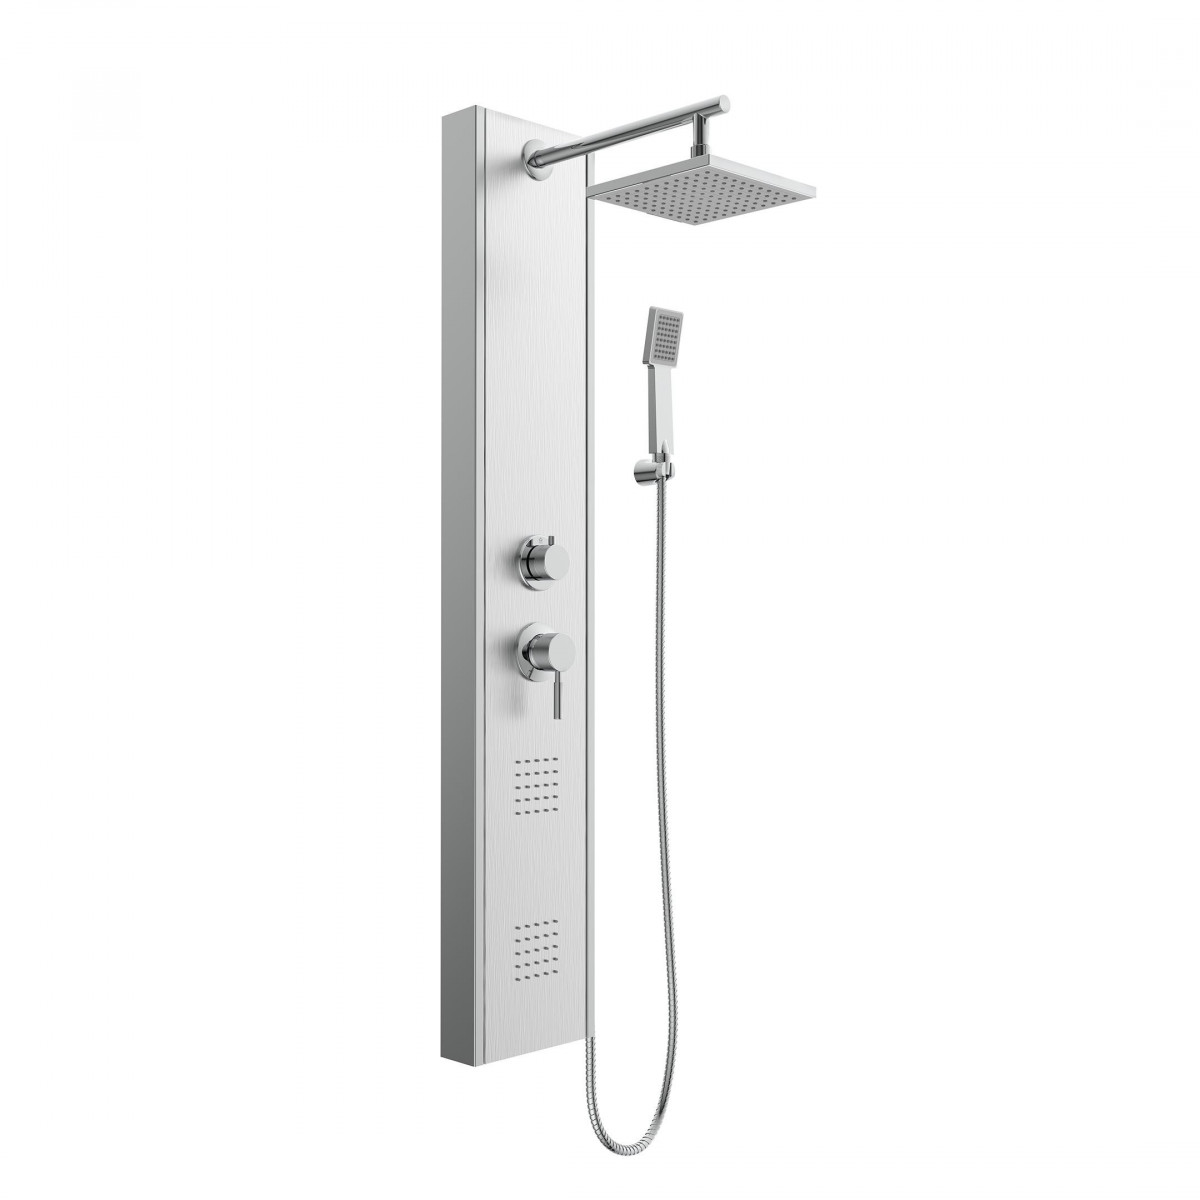 TAHITI Shower panel, stainless steel